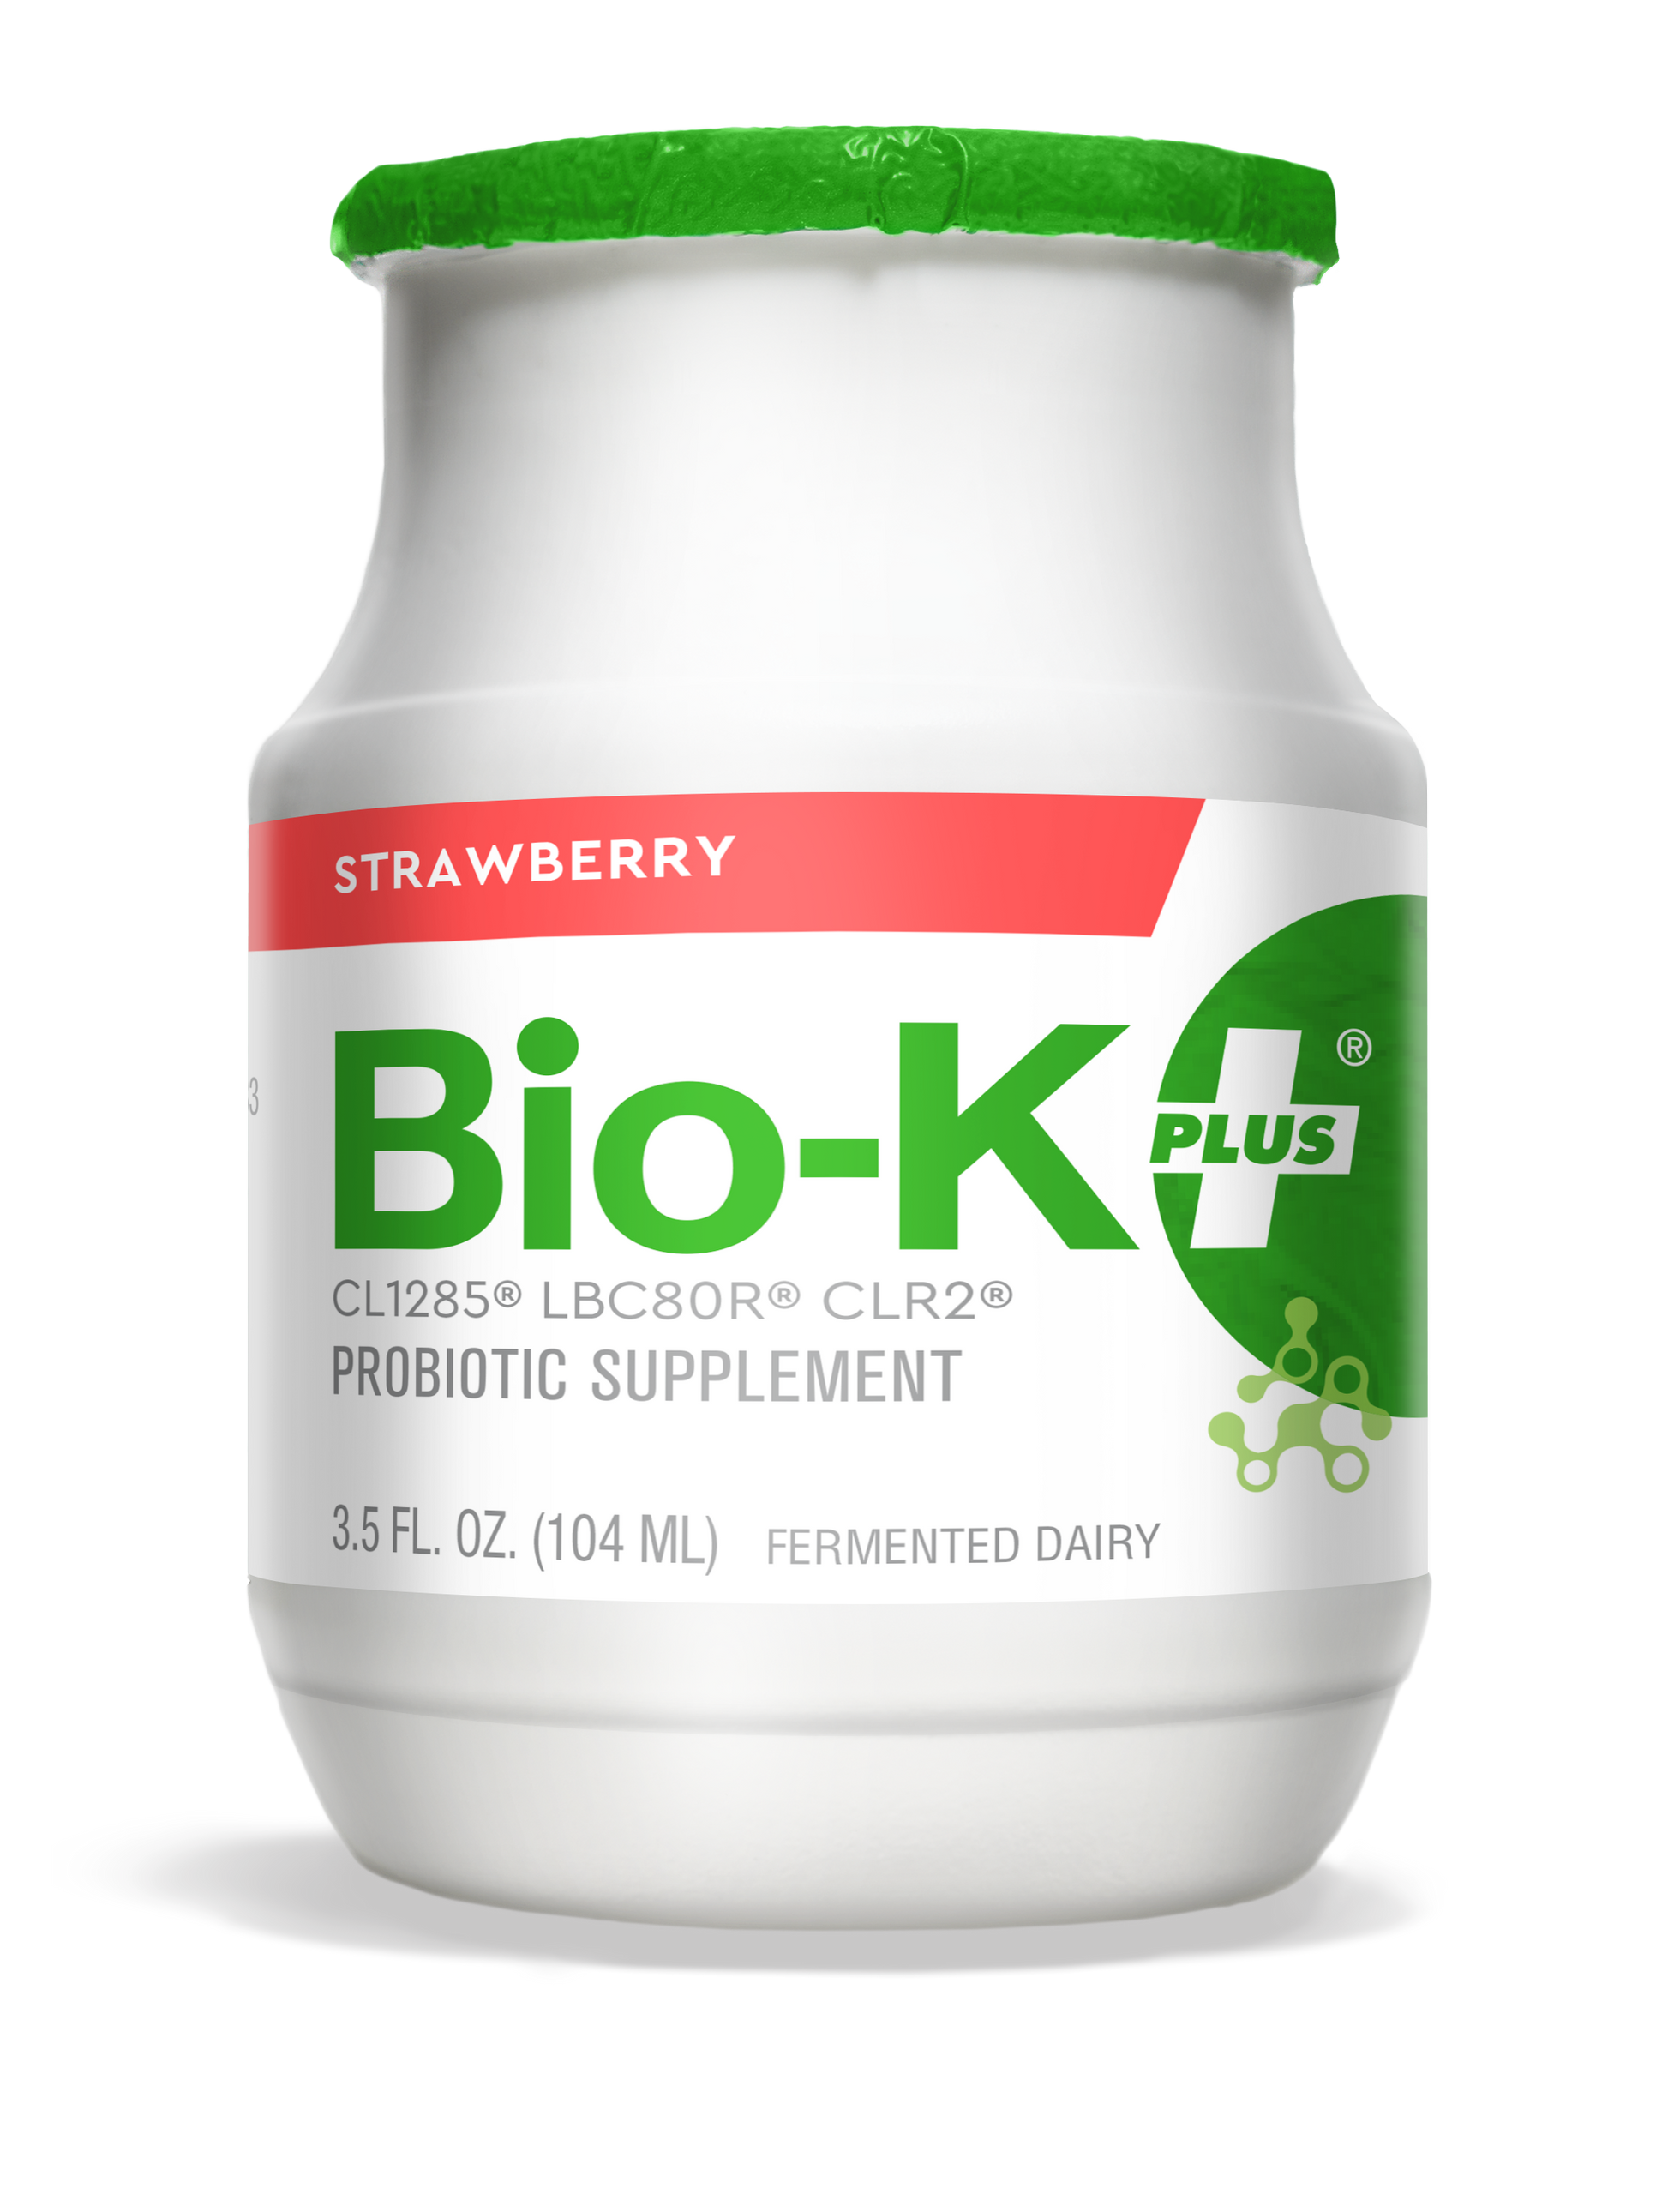 Bottle of Bio-K+ Strawberry FERMENTED DAIRY DRINKABLE PROBIOTIC